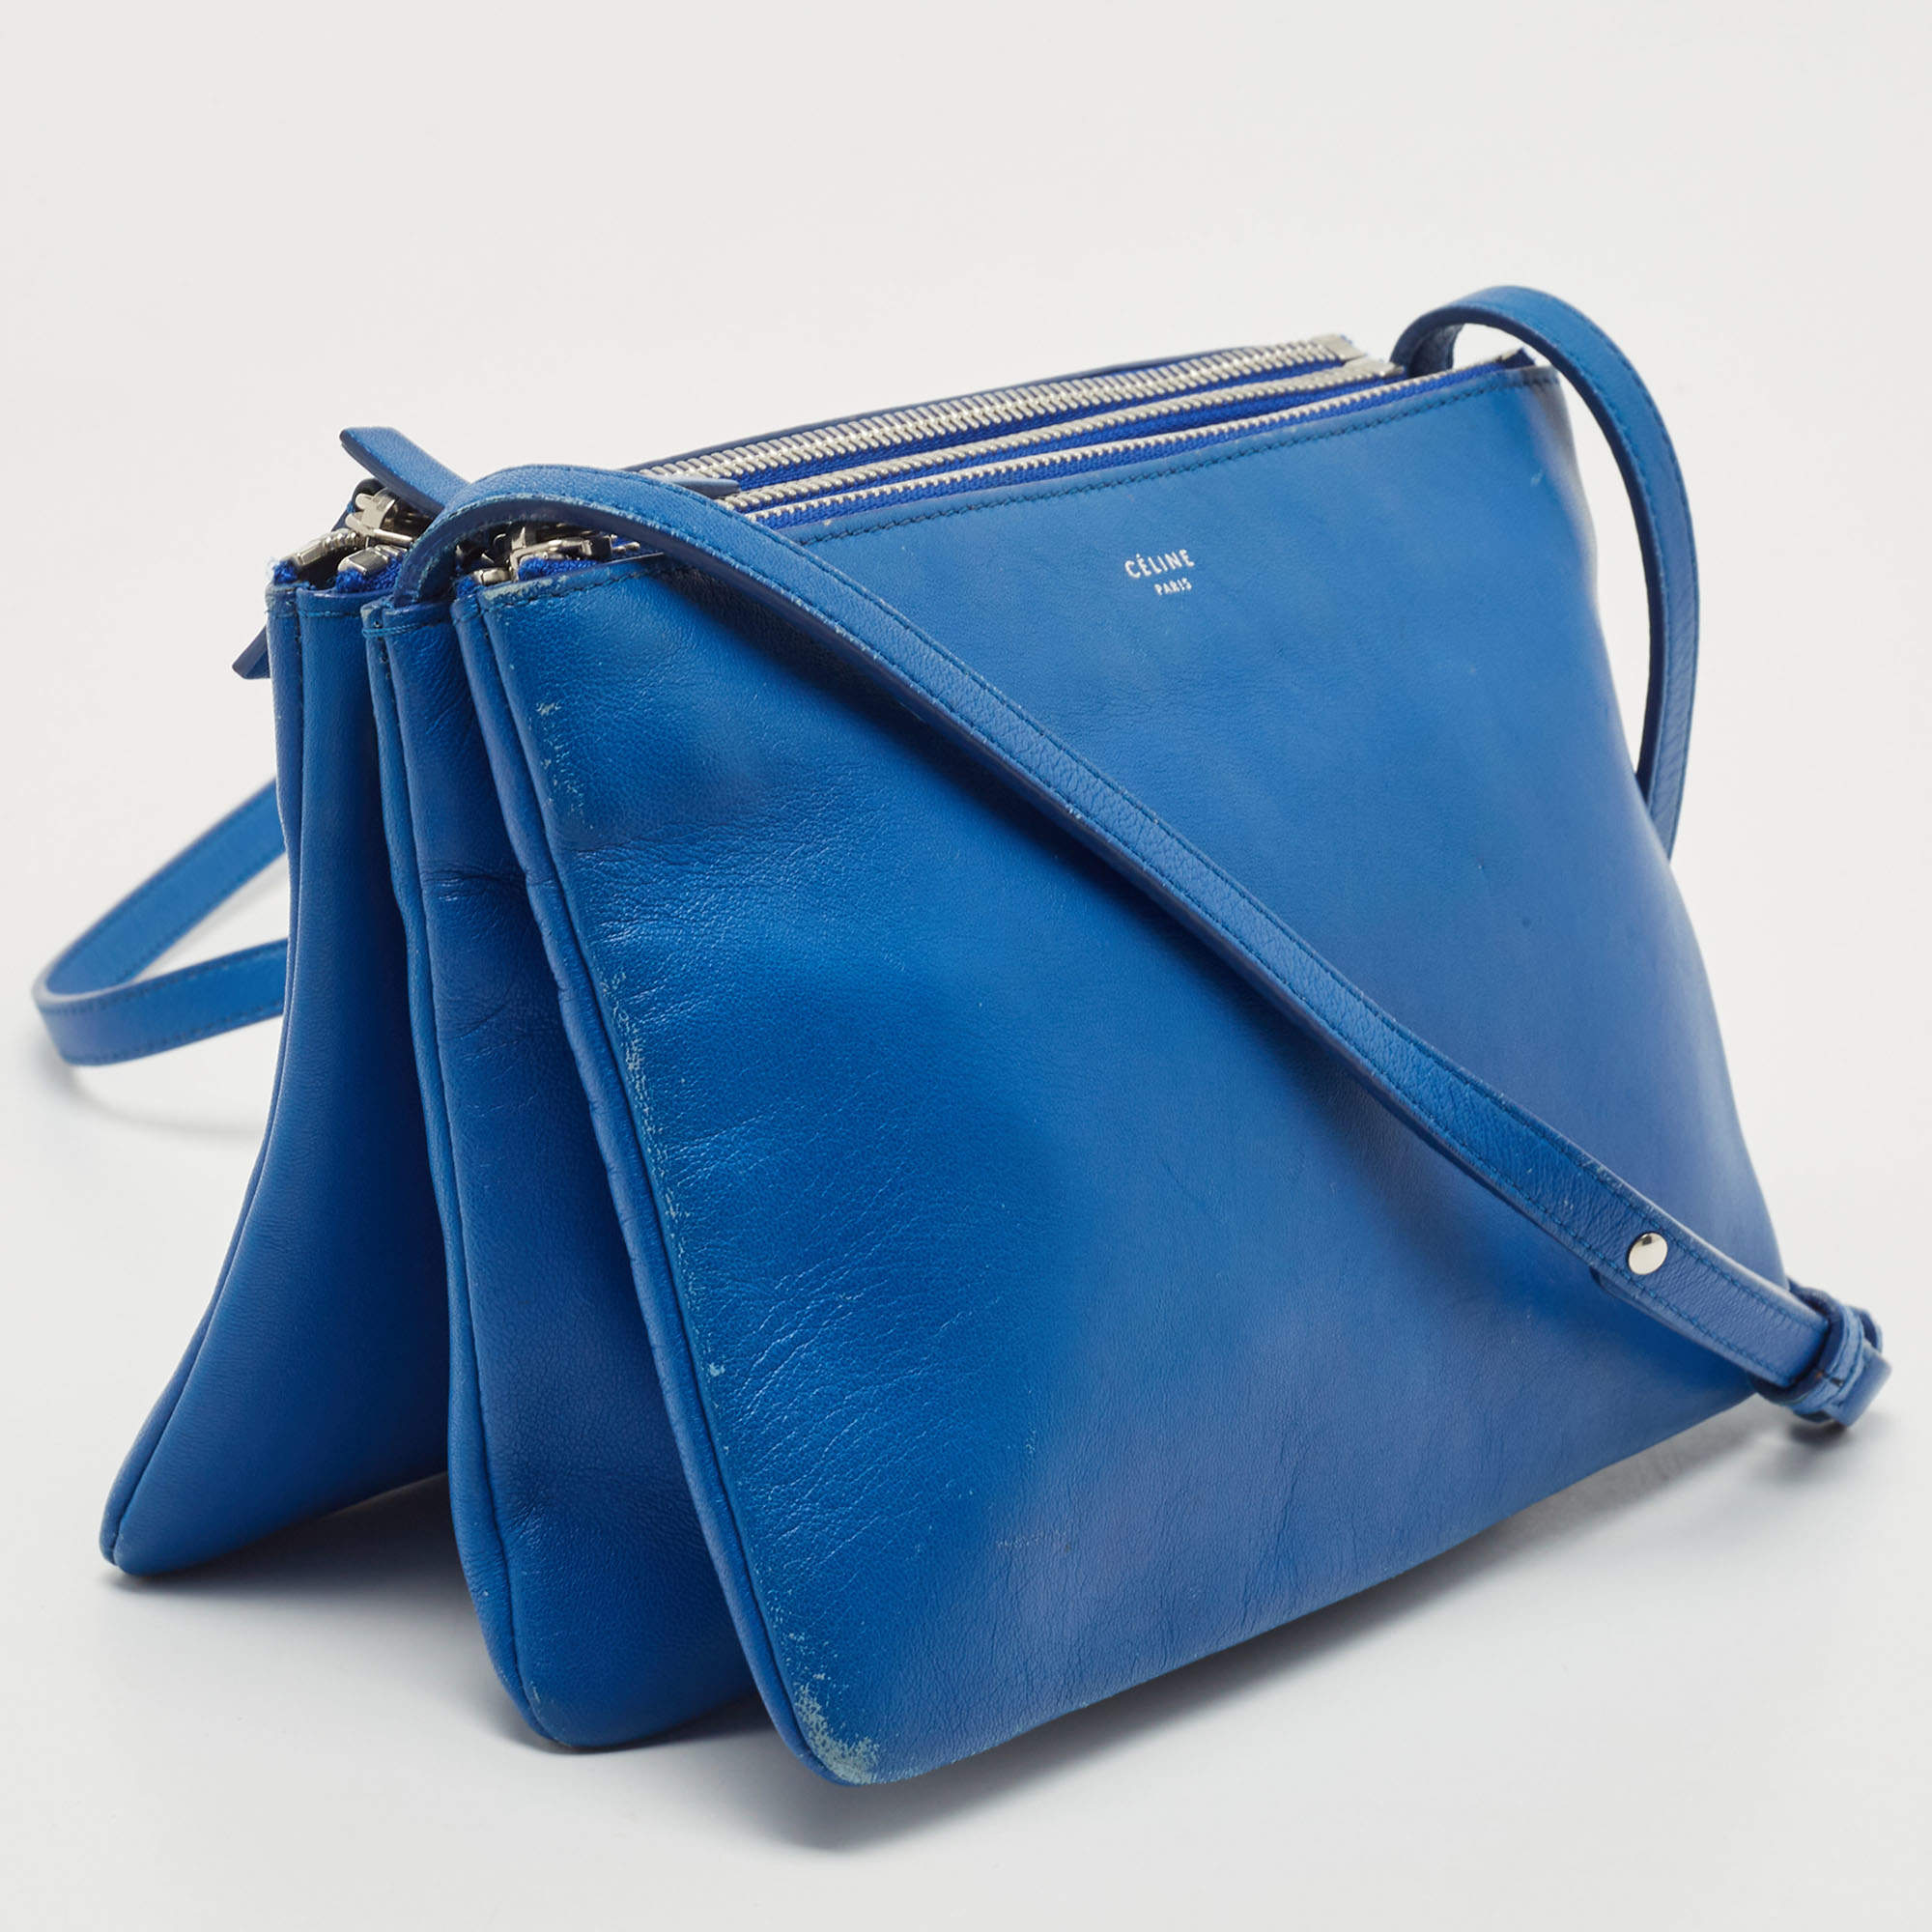 Celine Blue Leather Small Trio Crossbody Bag